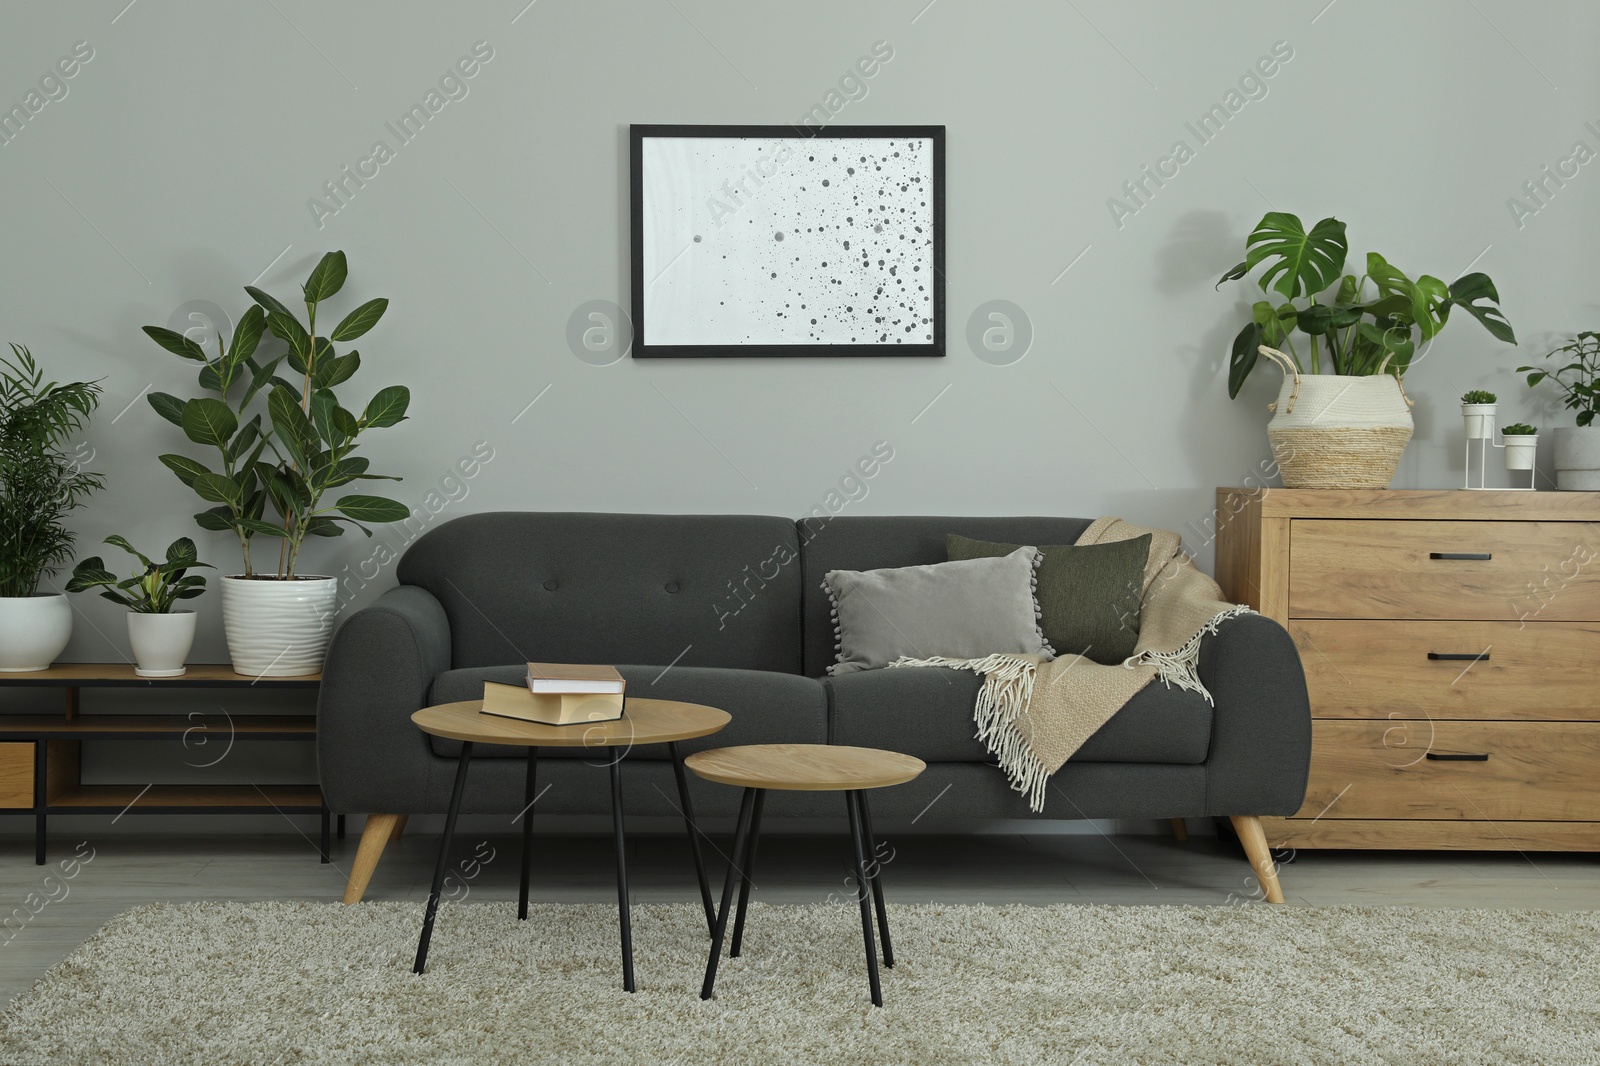 Photo of Stylish room with comfortable sofa and beautiful houseplants. Interior design